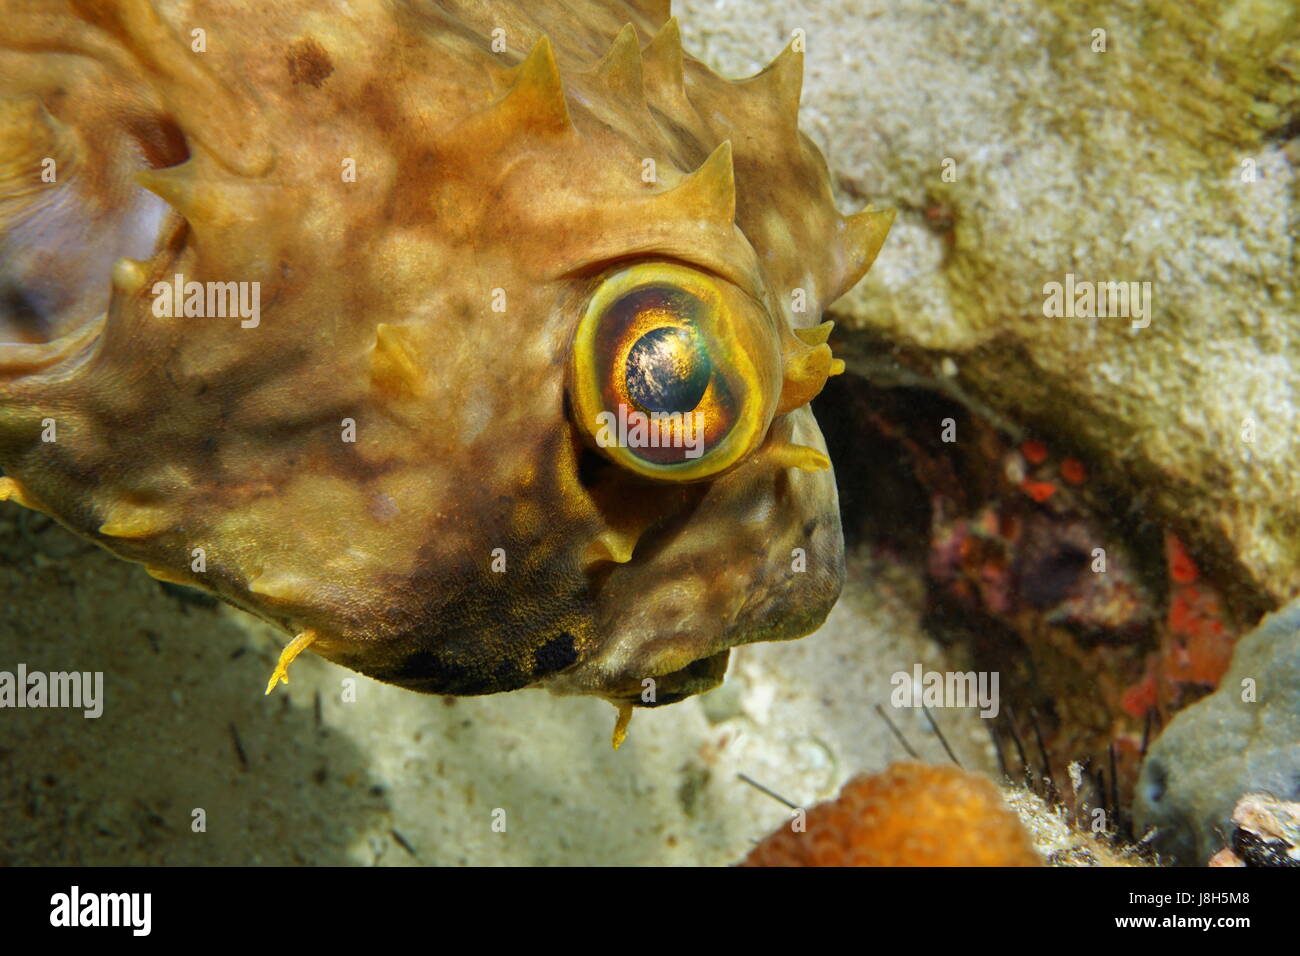 Tropical fish head and eye of a bridled burrfish, Chilomycterus antennatus, underwater in the Caribbean sea, Costa Rica Stock Photo